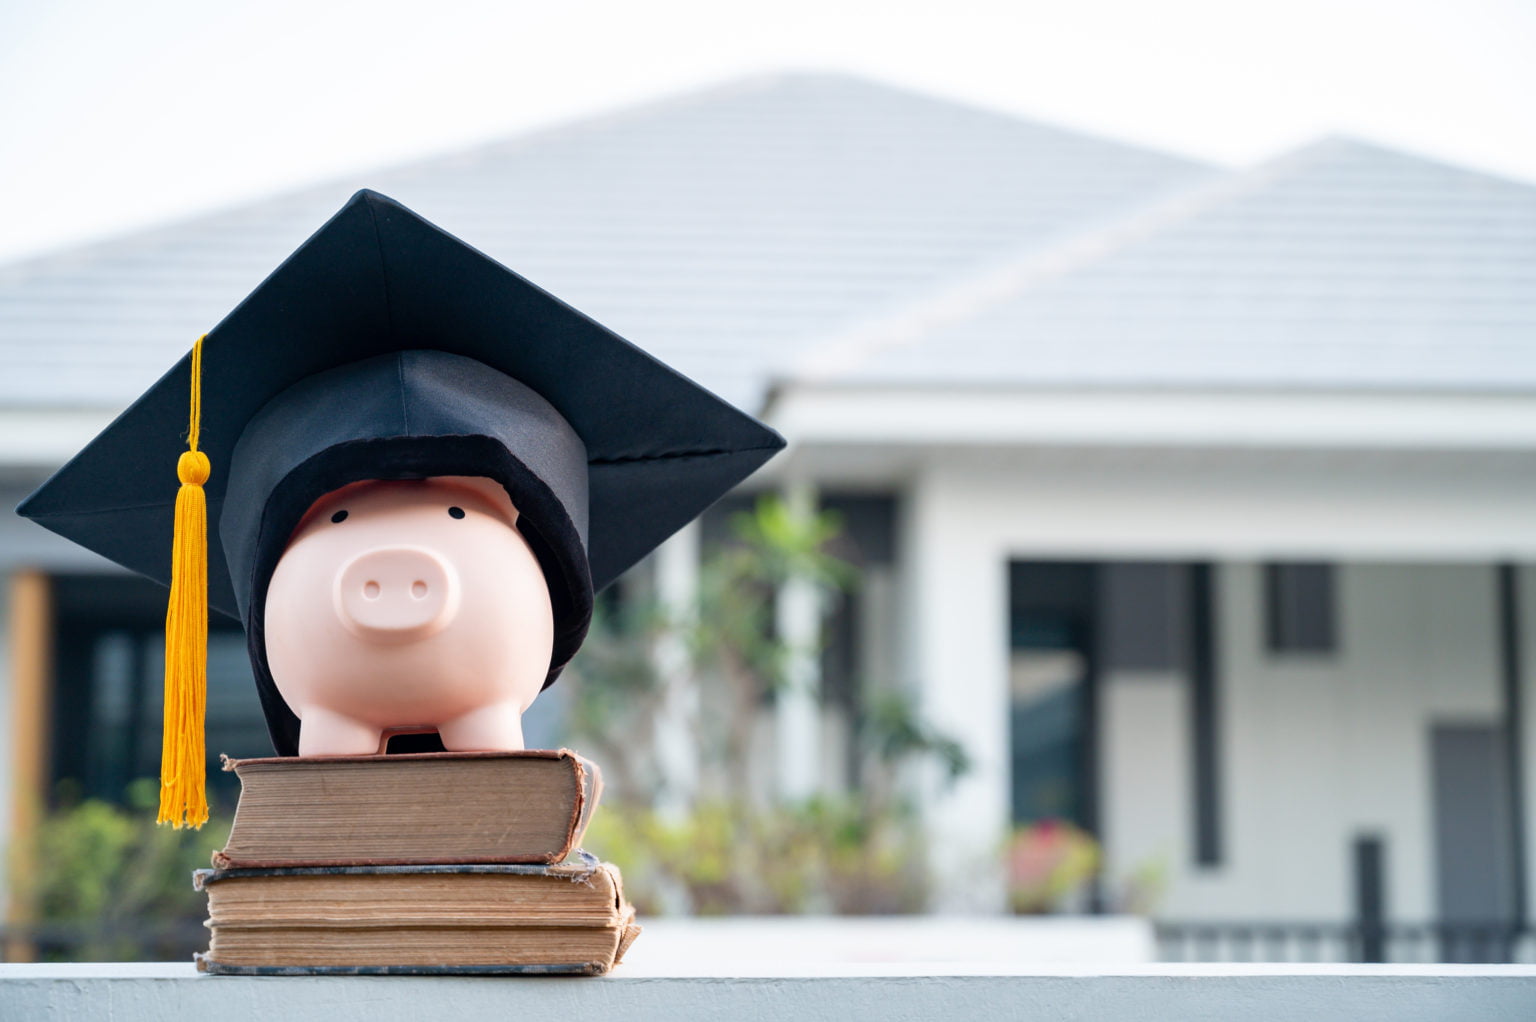 piggy bank and graduation cap University level. Concept of saving money for education.